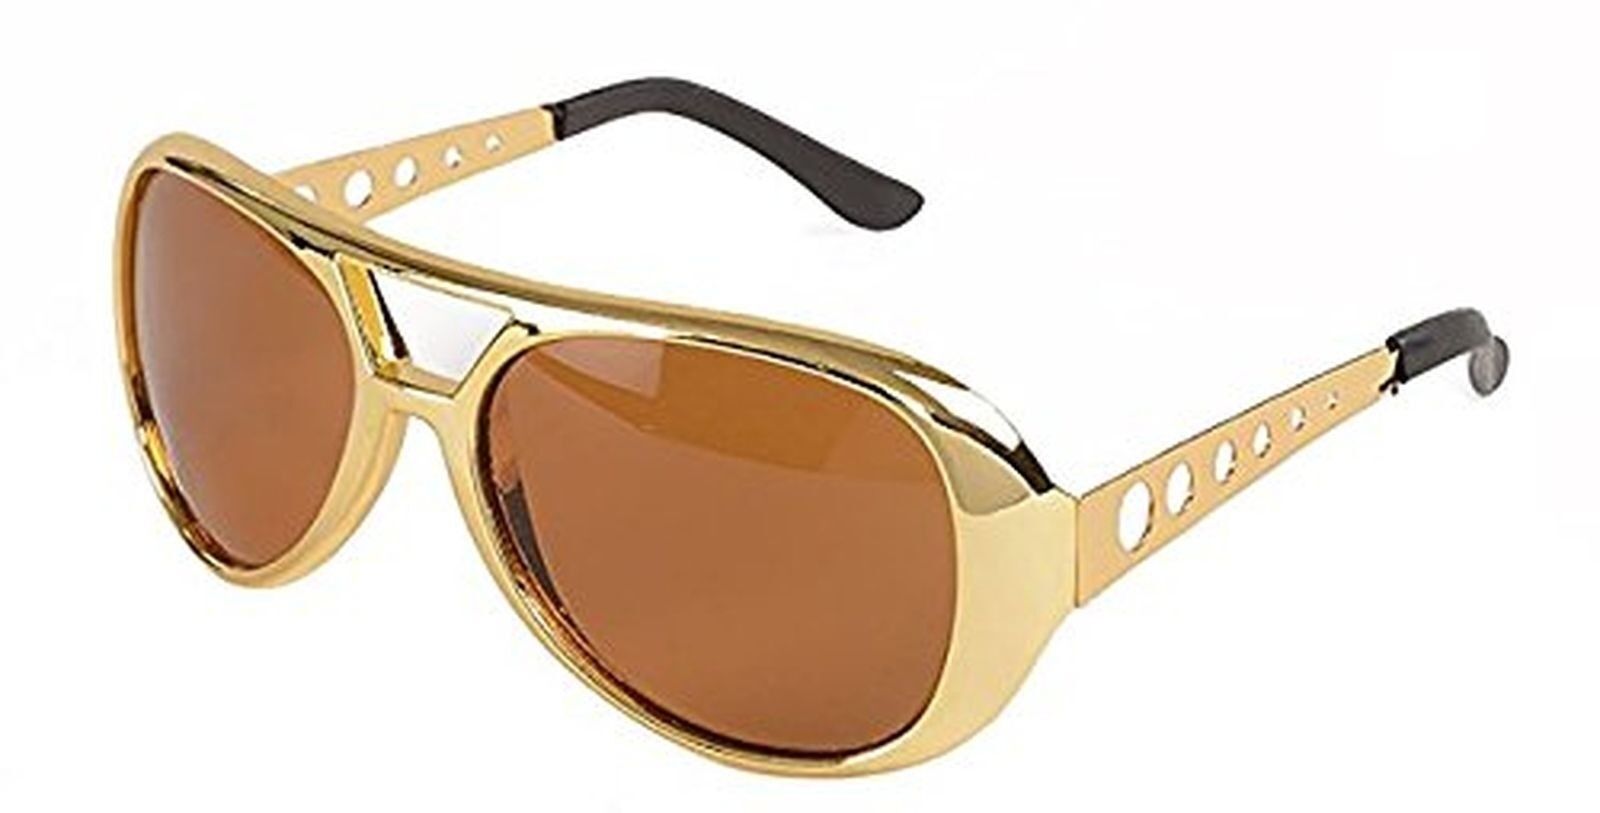 Elvis Glasses 50/’s 60/’s Style Rockstar Aviator Shades 2 Pairs by Bedwina Nautic Costume Party Vegas Rock Star Sunglasses